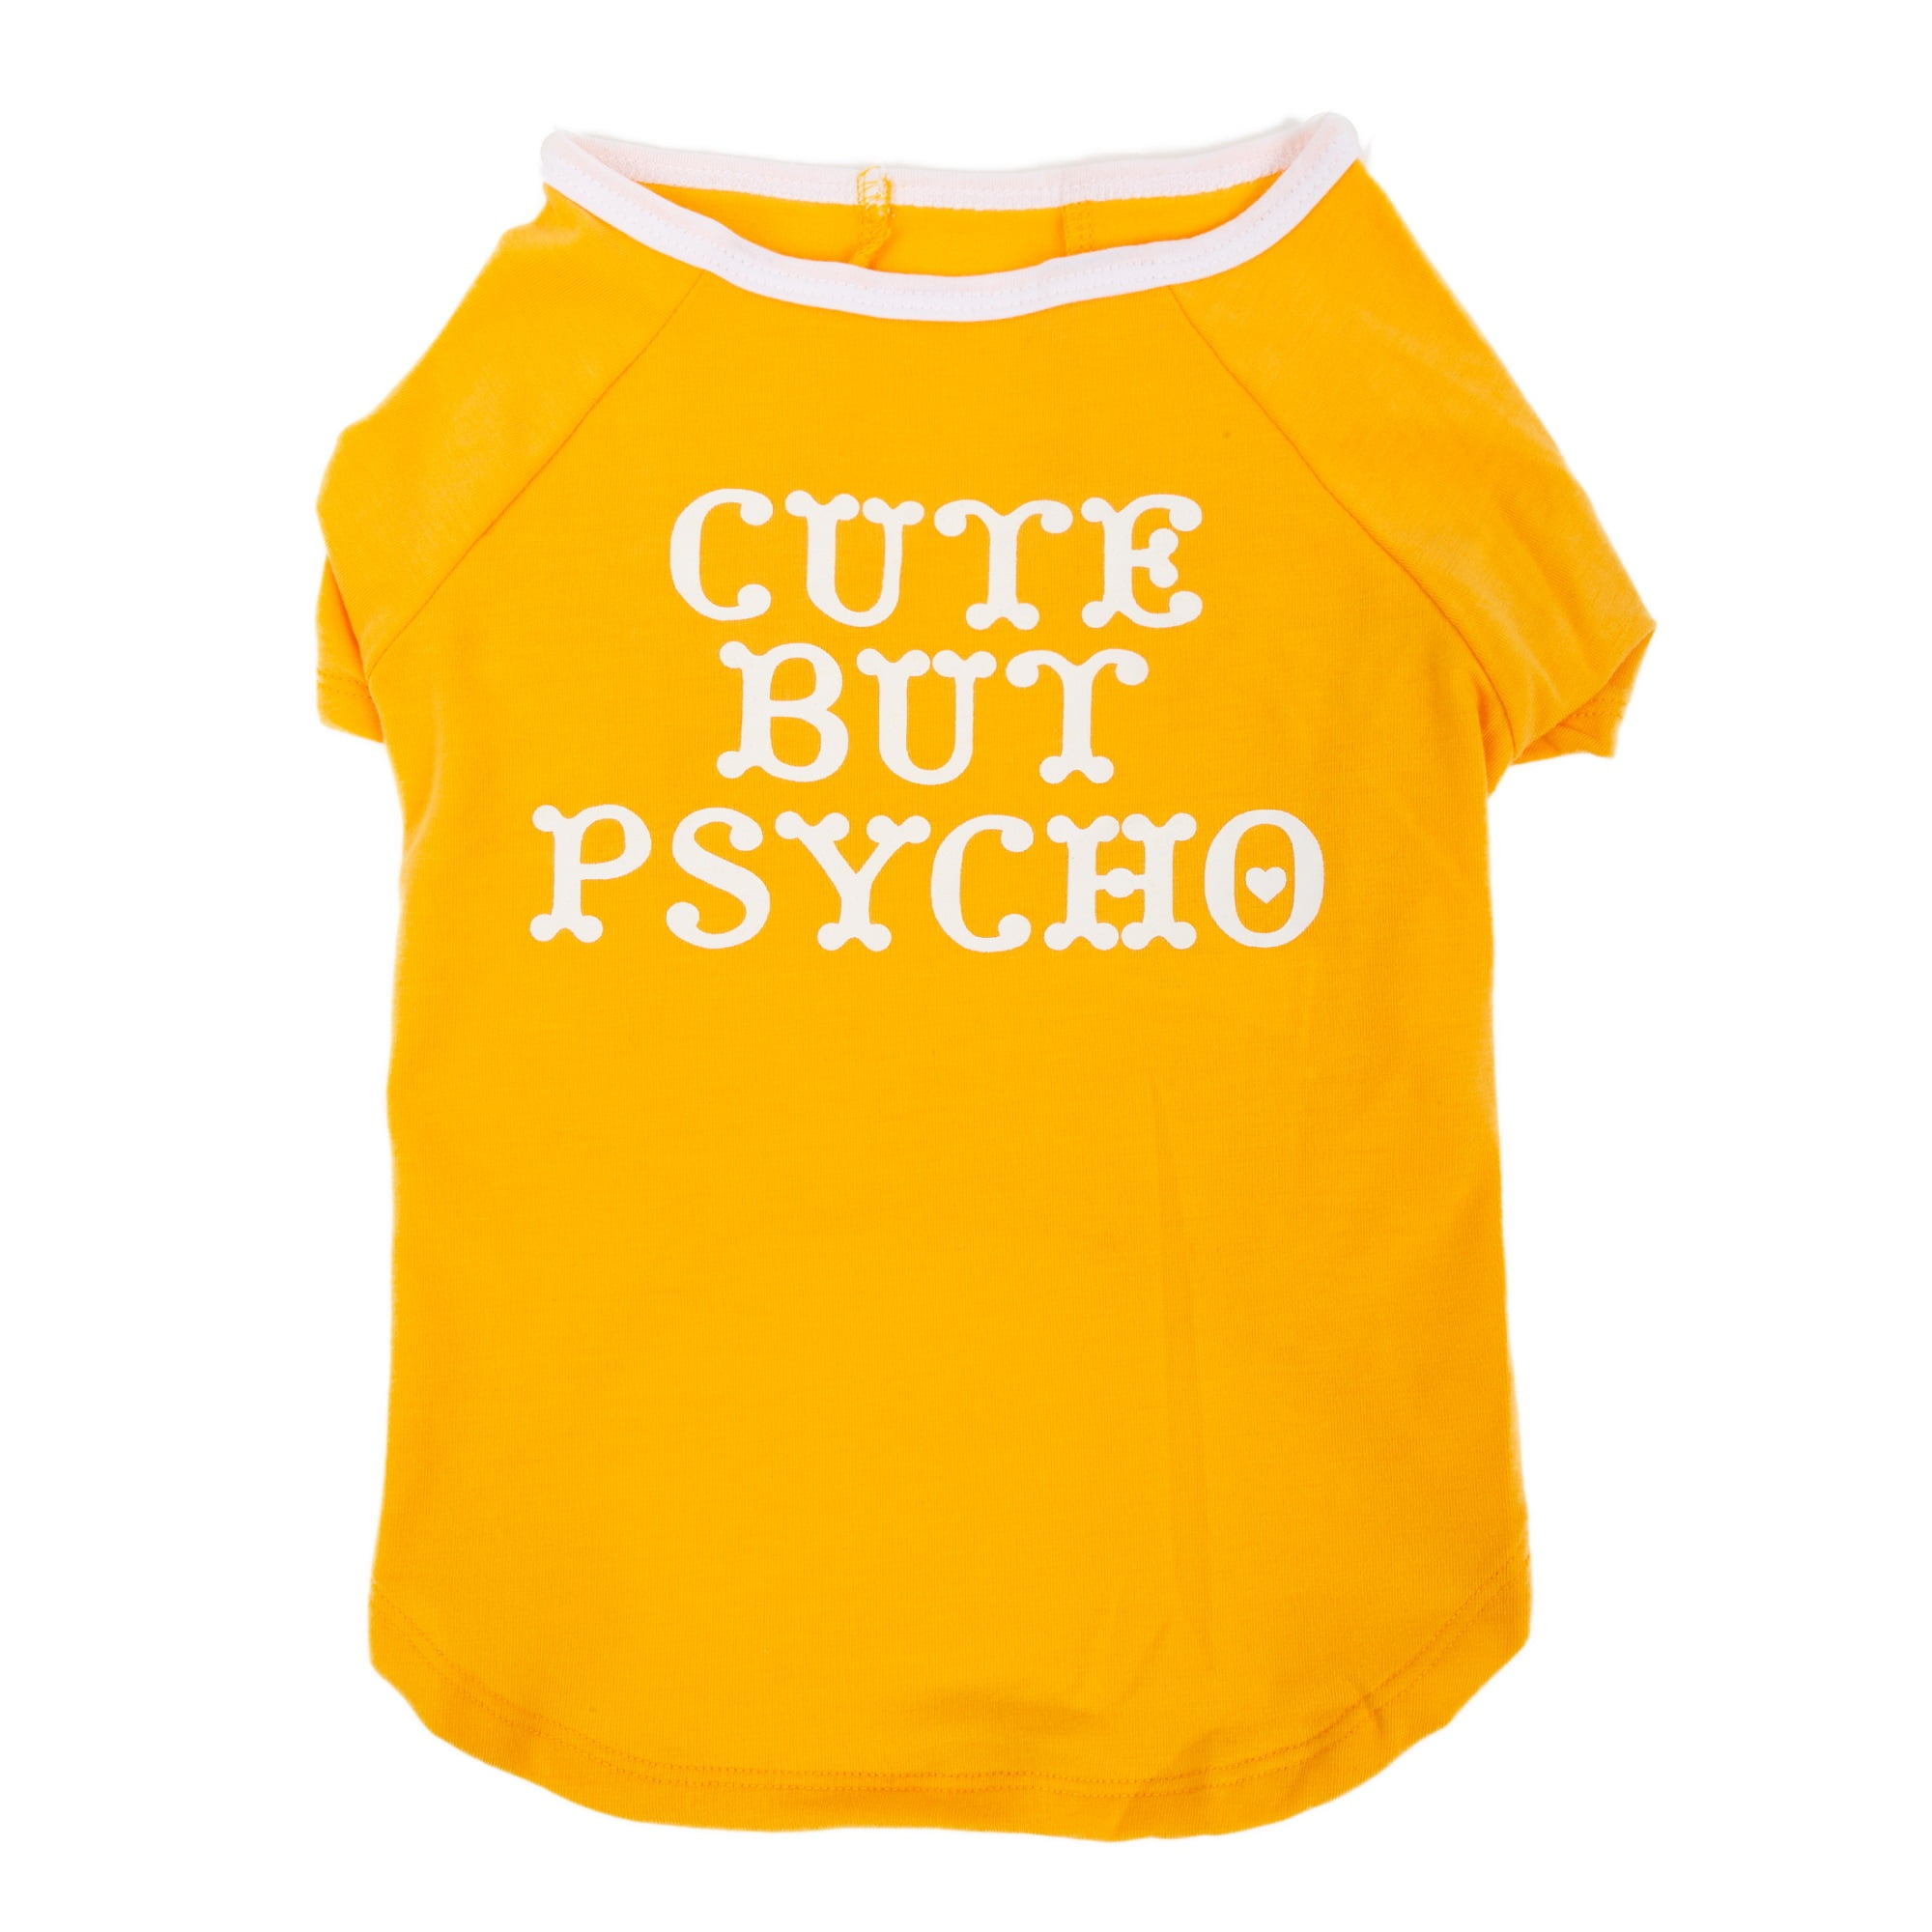 Cute But Psycho Dog Shirt